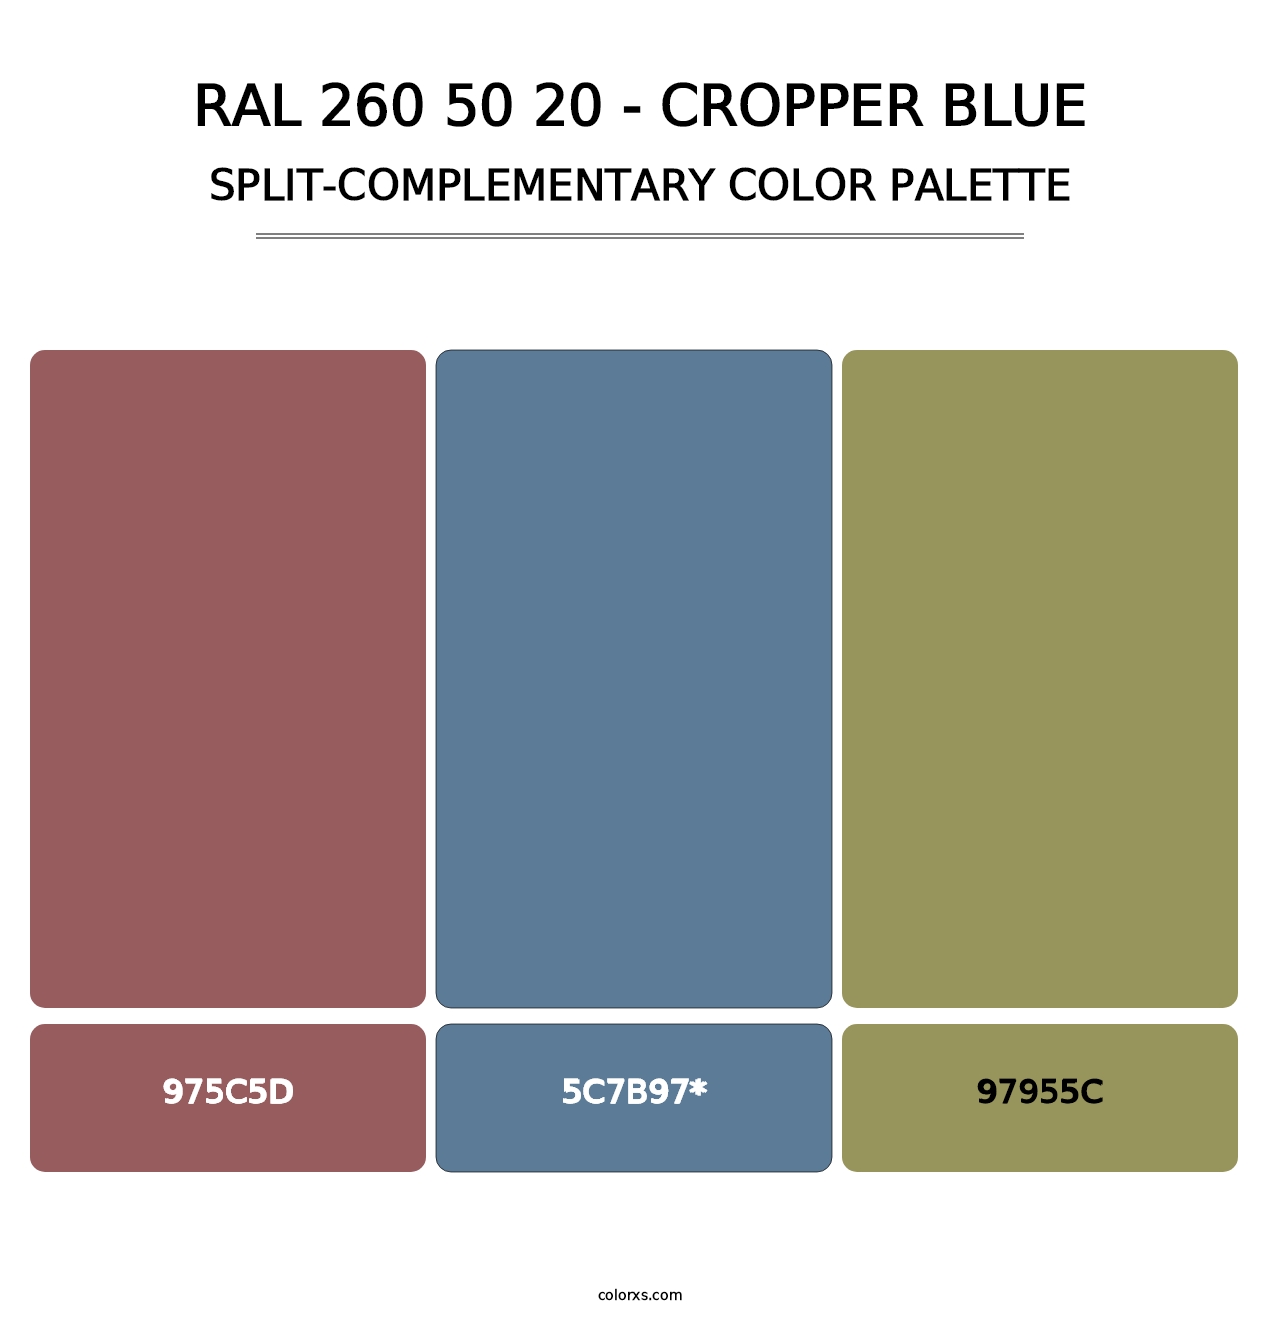 RAL 260 50 20 - Cropper Blue - Split-Complementary Color Palette